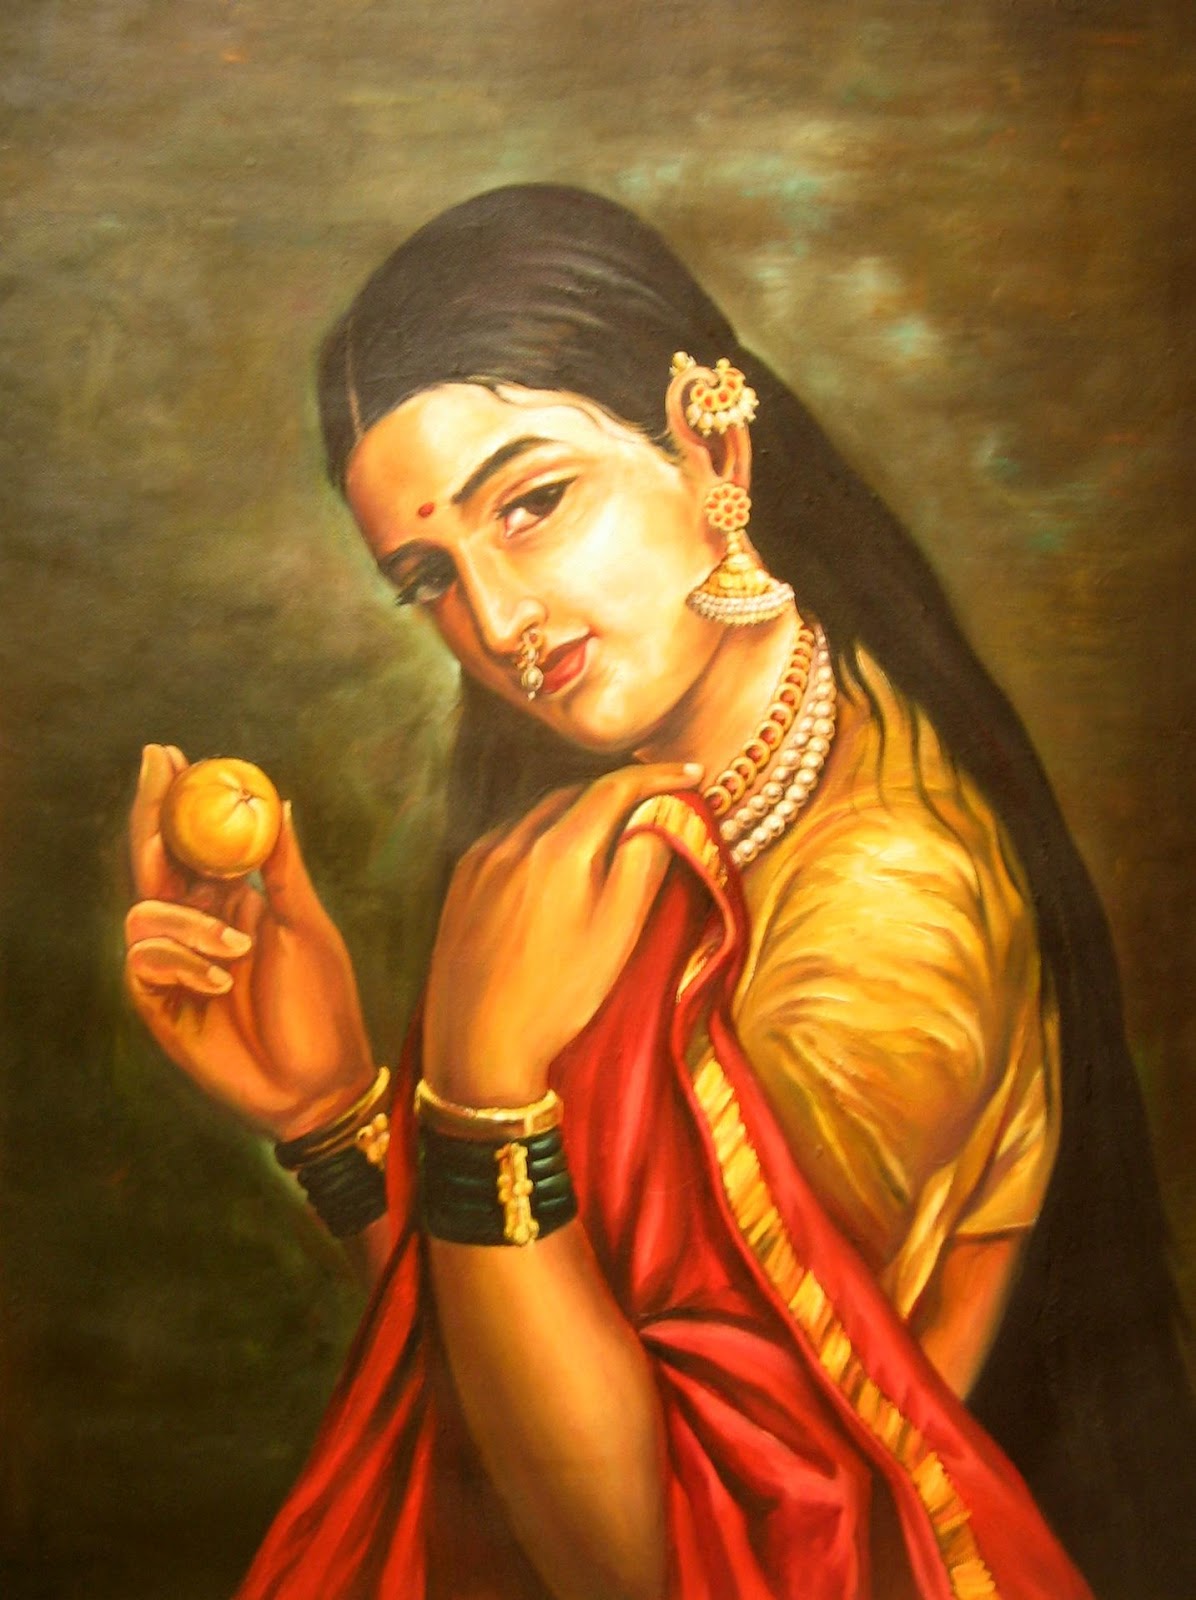 Indian Paintings Knowledge N Entertenment